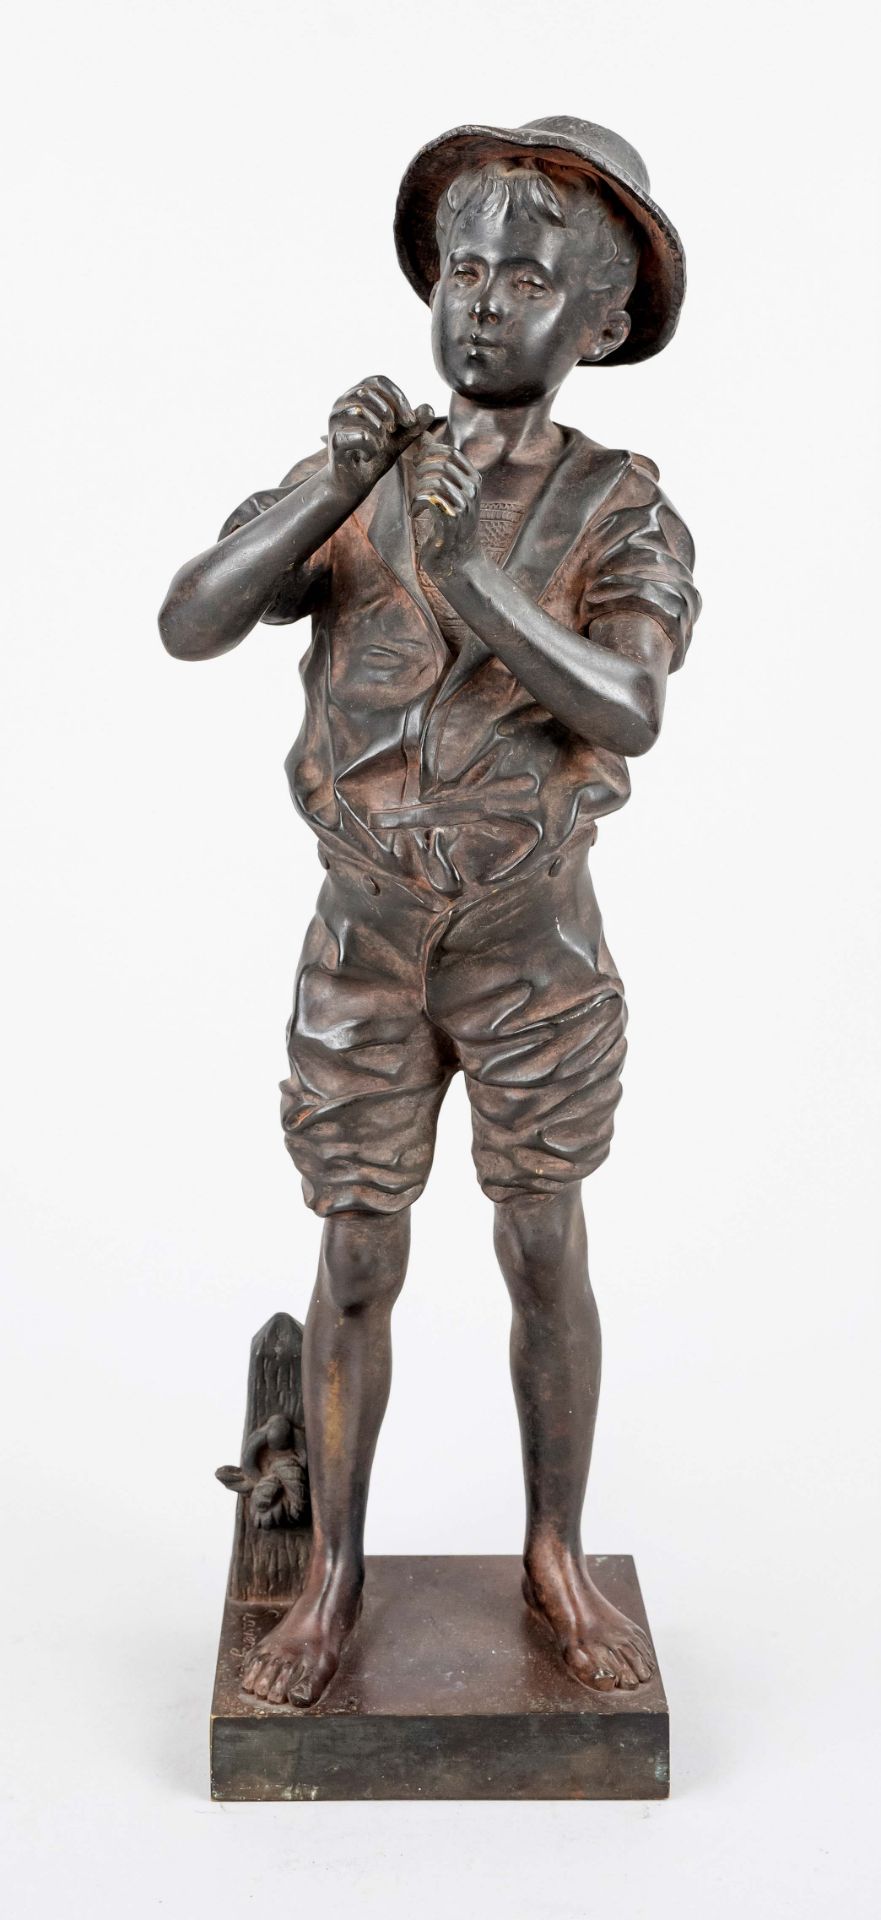 Adolphe Jean Lavergne (ca. 1863-1928), French sculptor, ''Le pecheur'', bronze sculpture of a